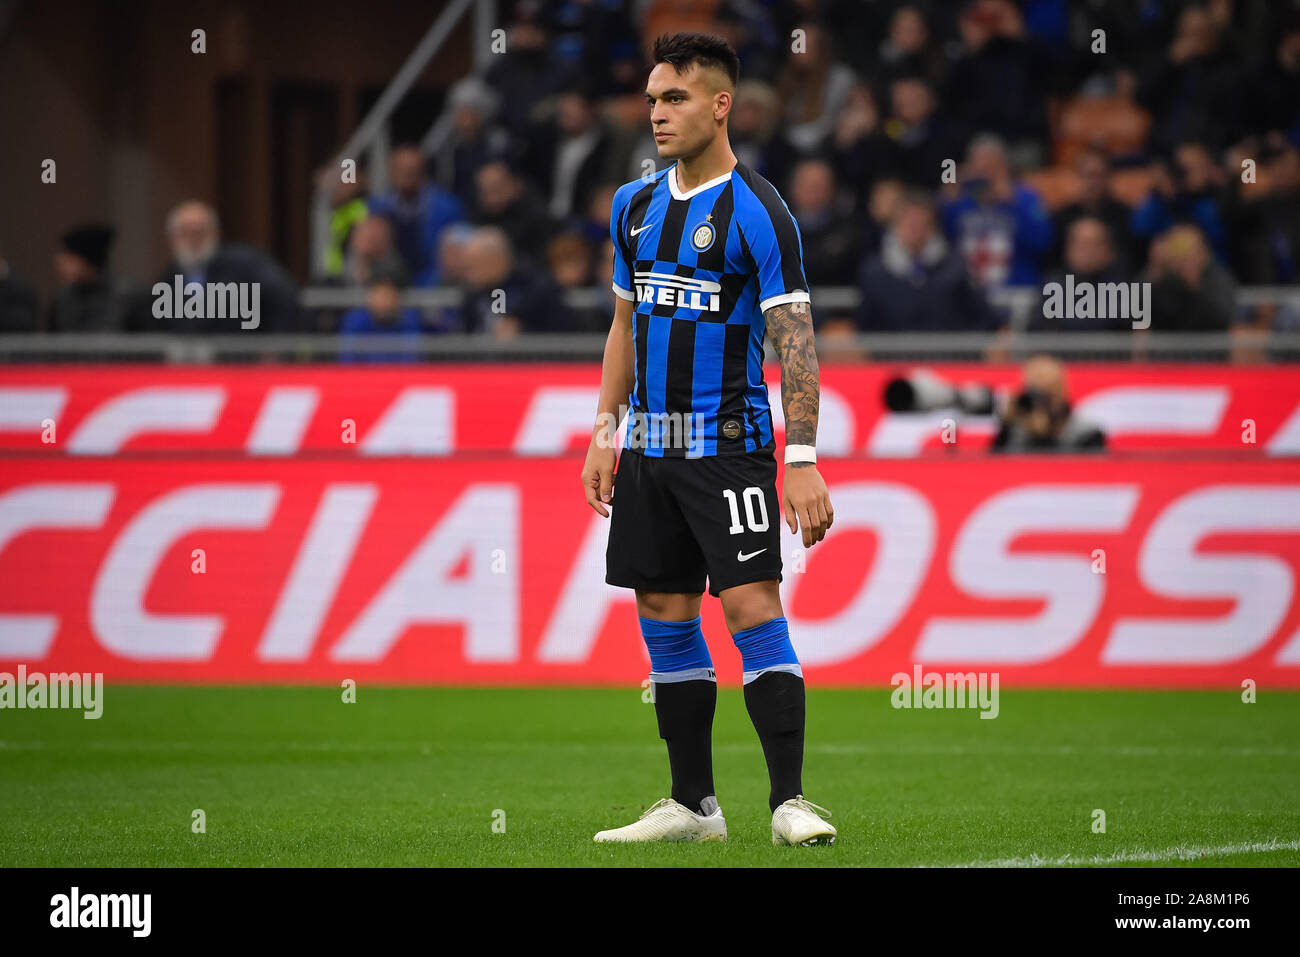 Inter Milan Immagini e Fotos Stock - Alamy